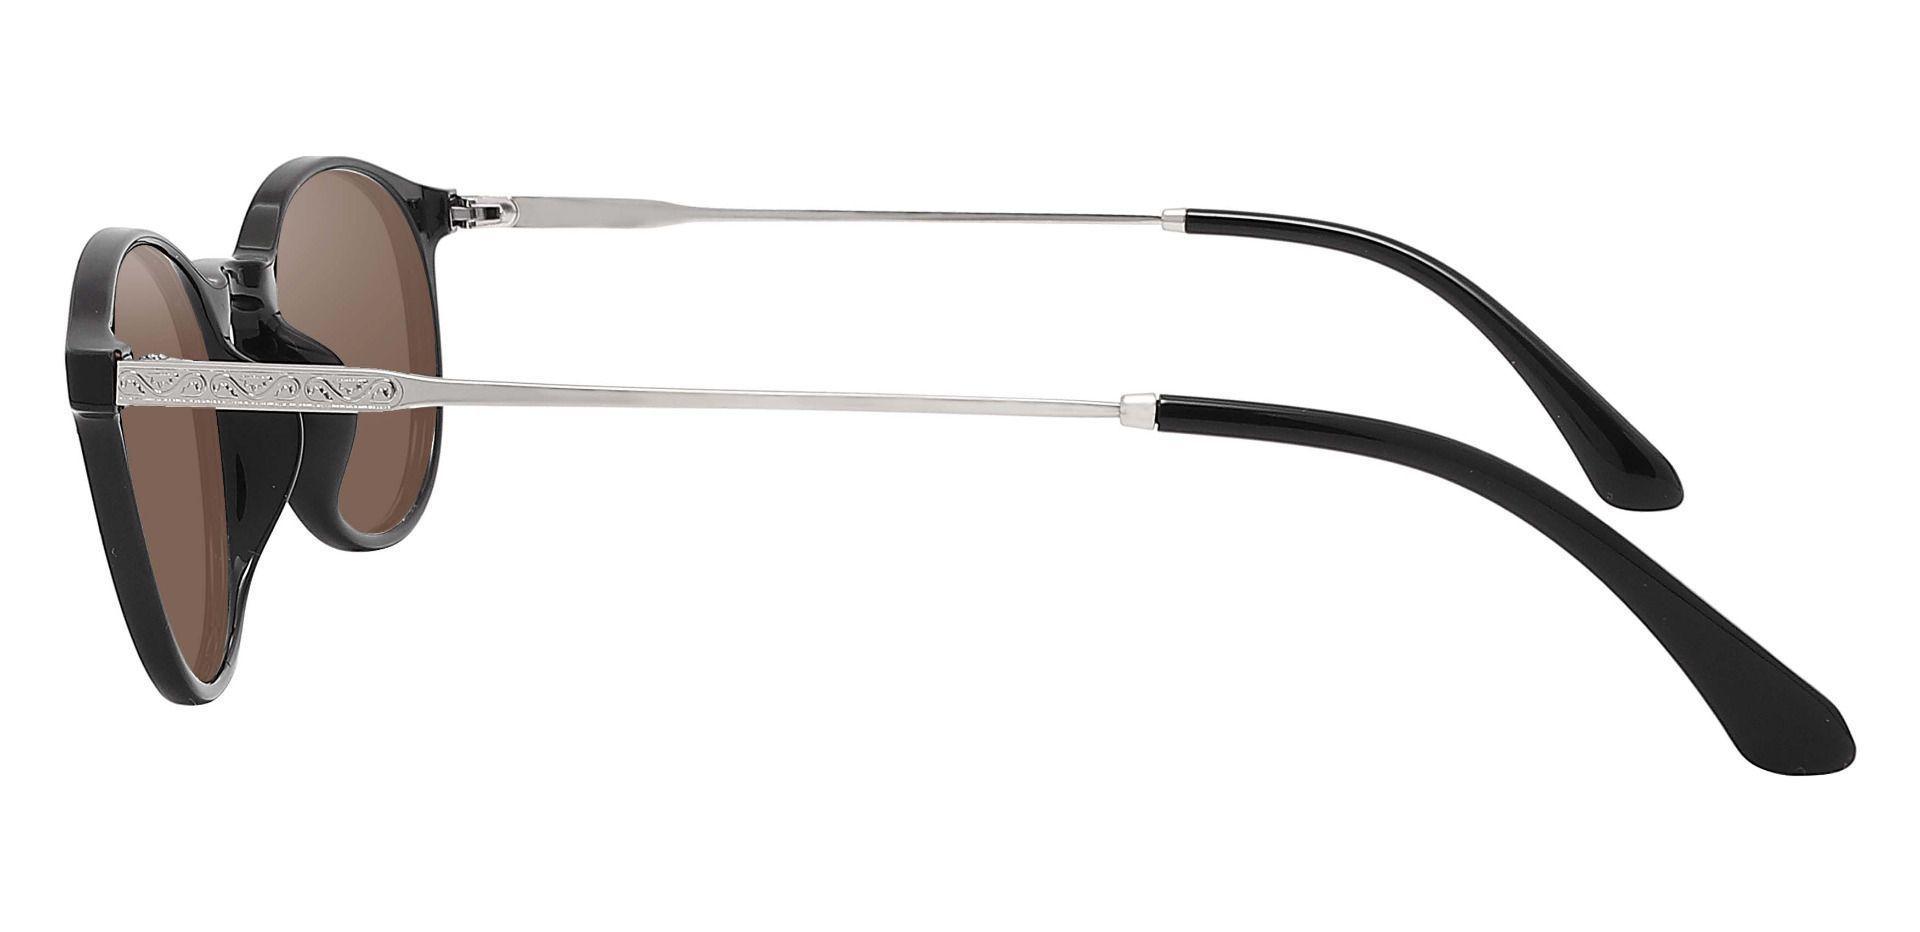 Felton Oval Non-Rx Sunglasses - Black Frame With Brown Lenses